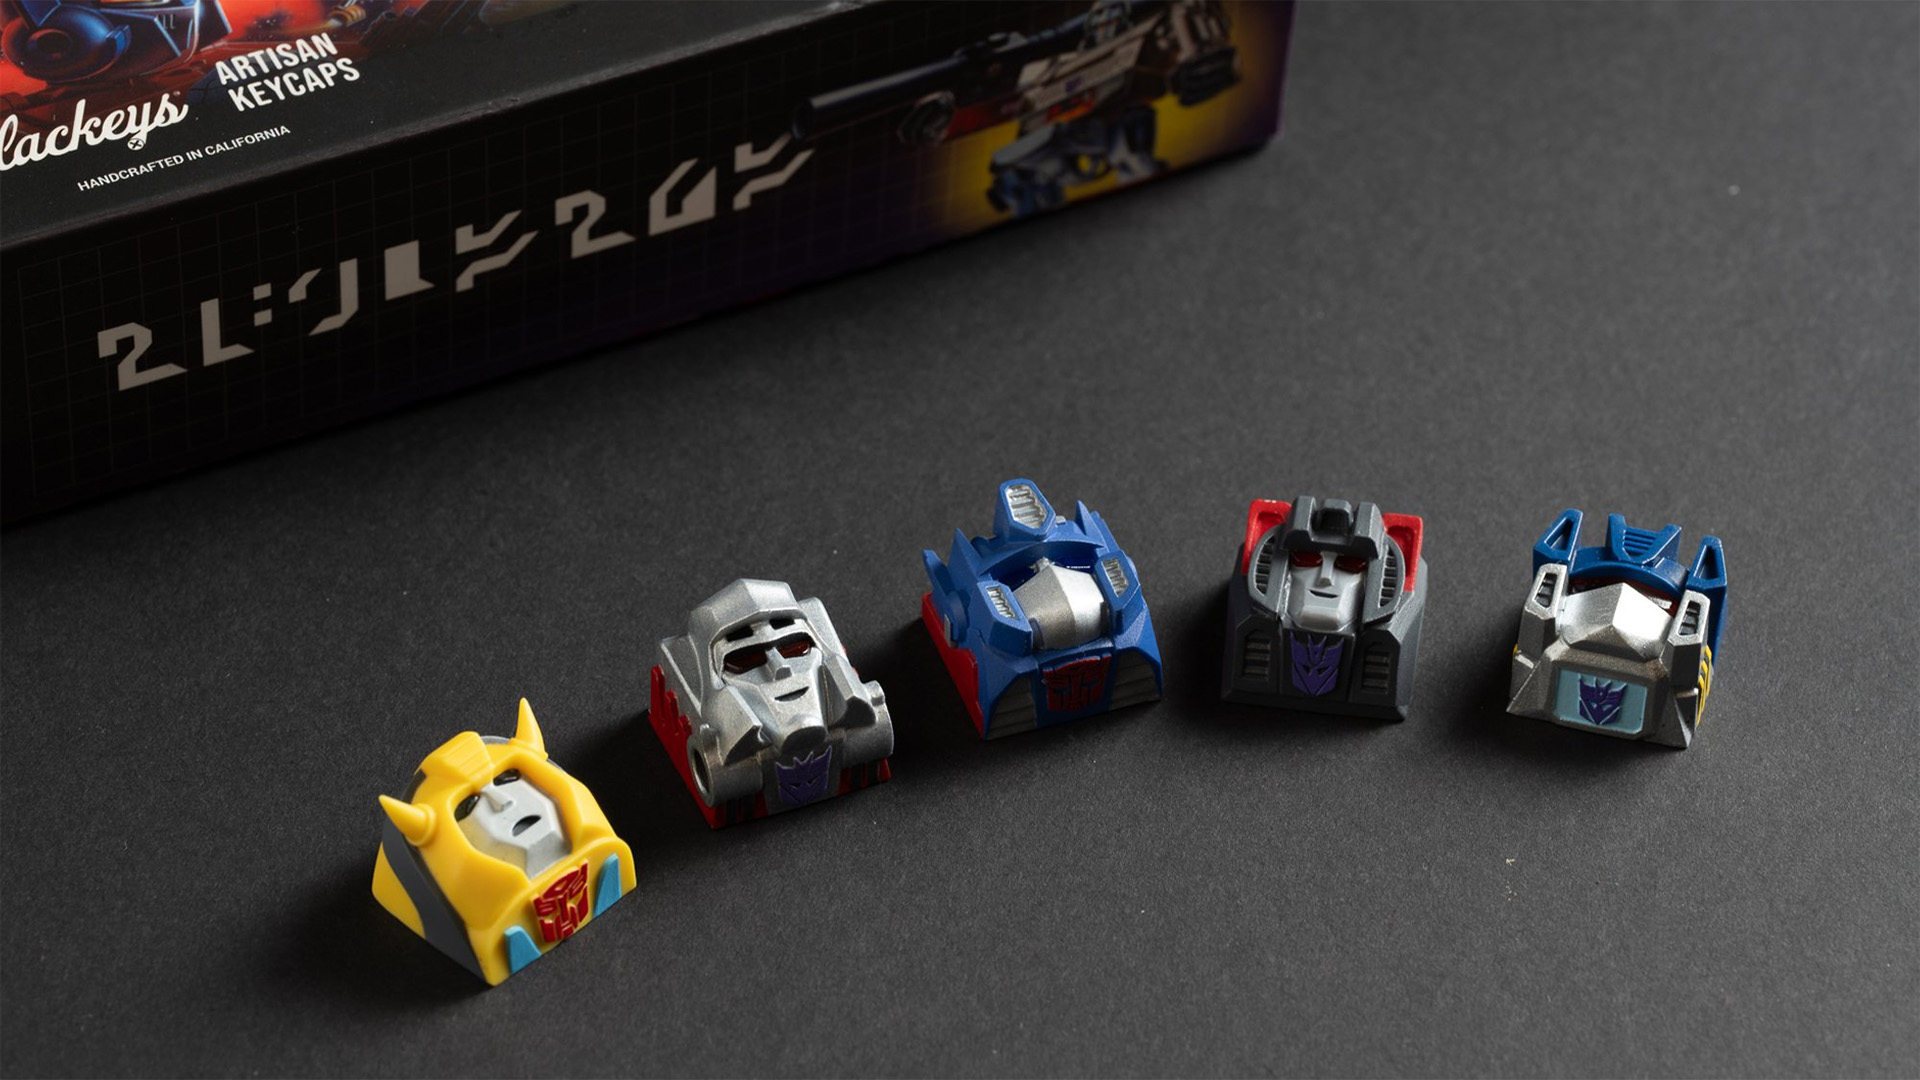 Clackeys' Transformers artisan keycaps